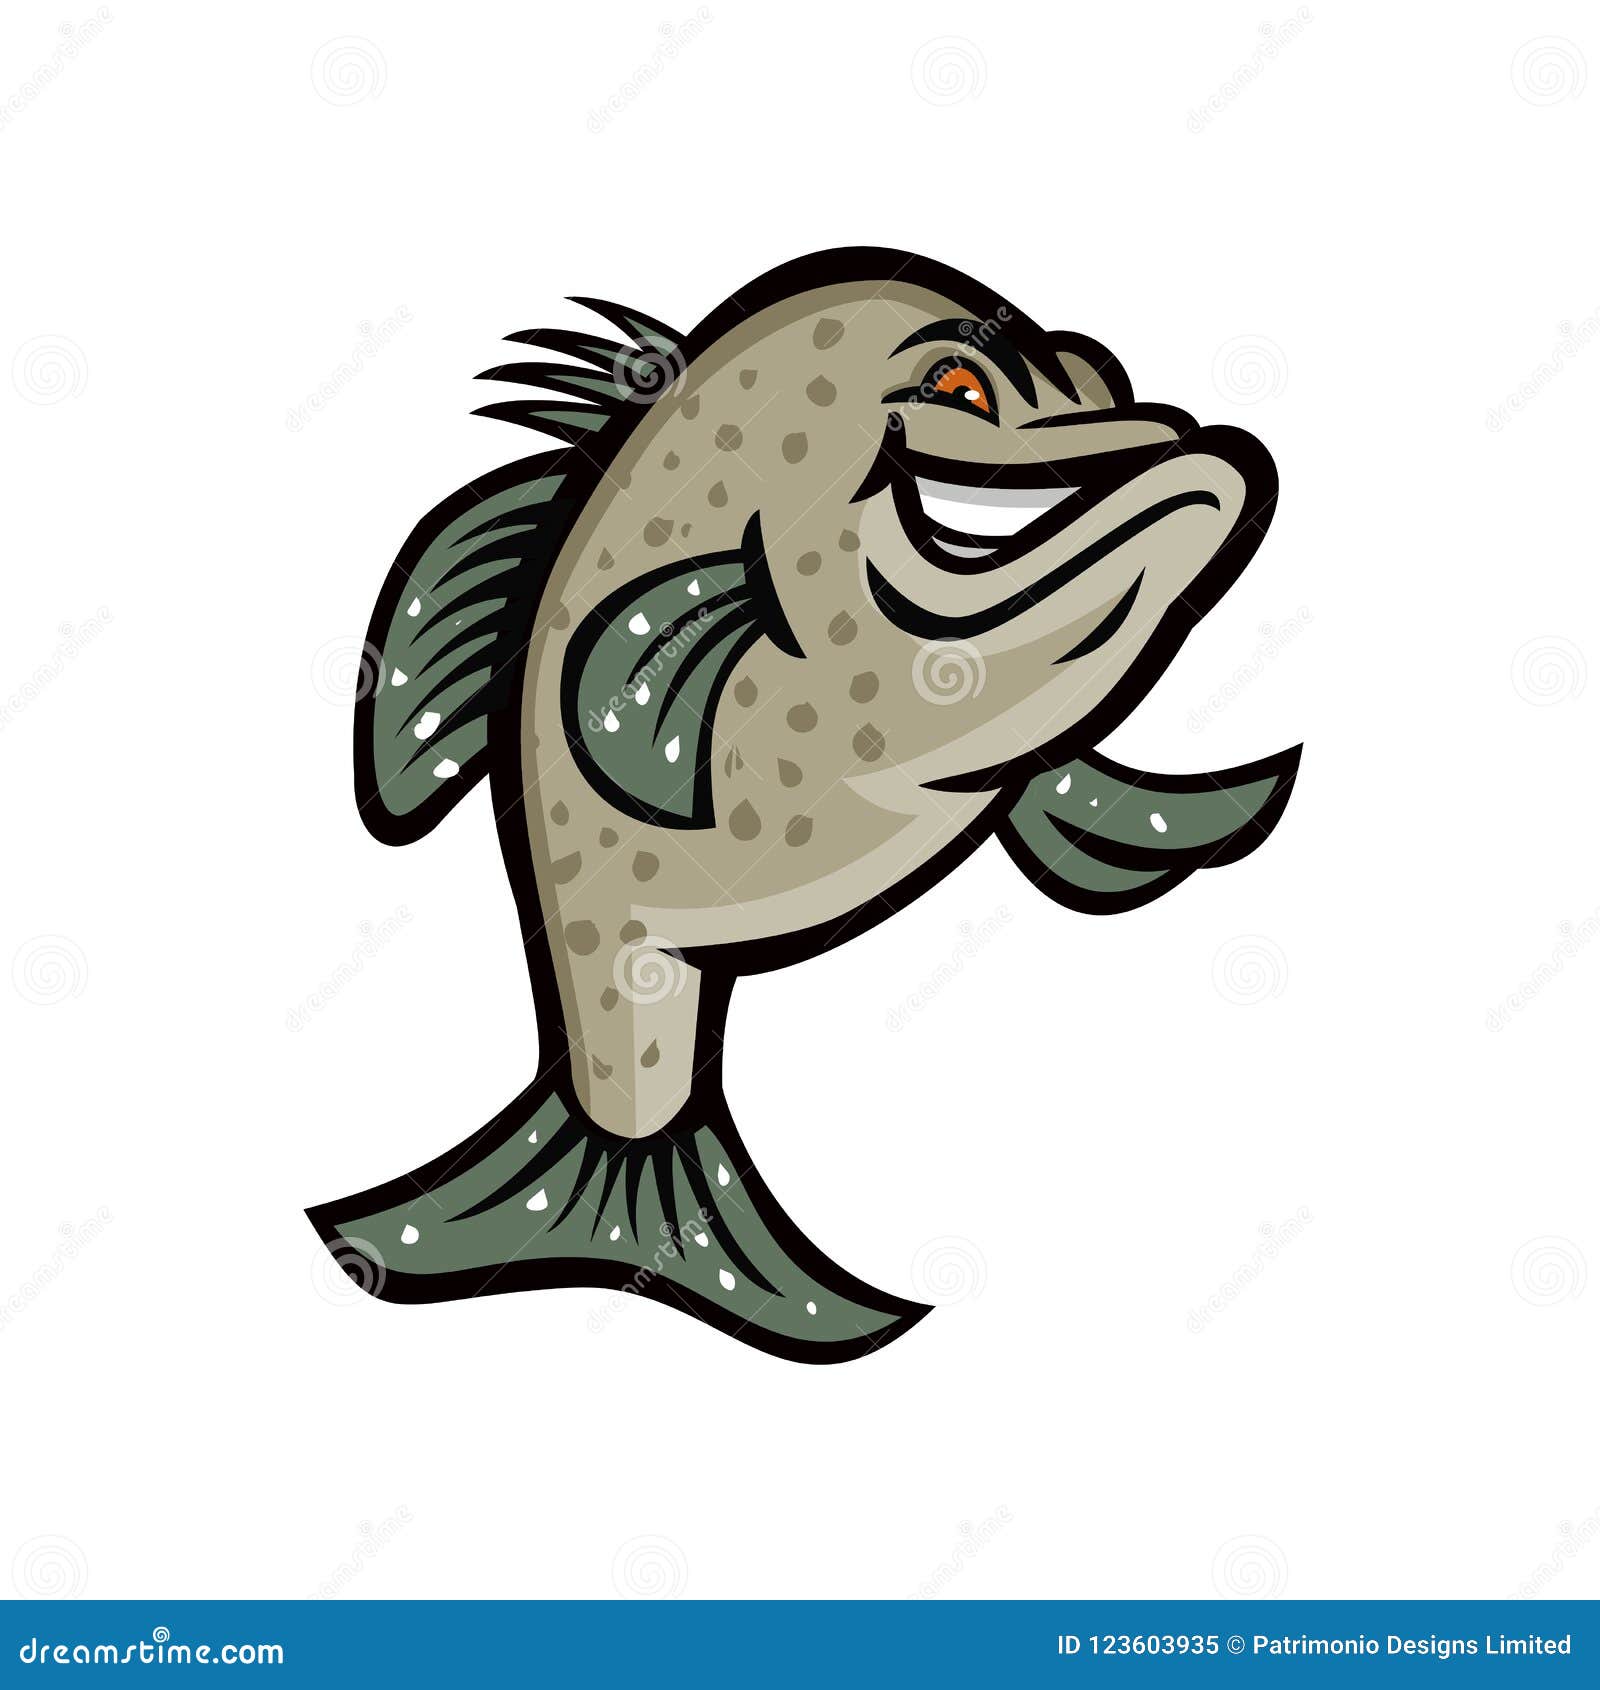 Download Crappie Fish Standing Mascot Stock Vector - Illustration of mascot, symbol: 123603935